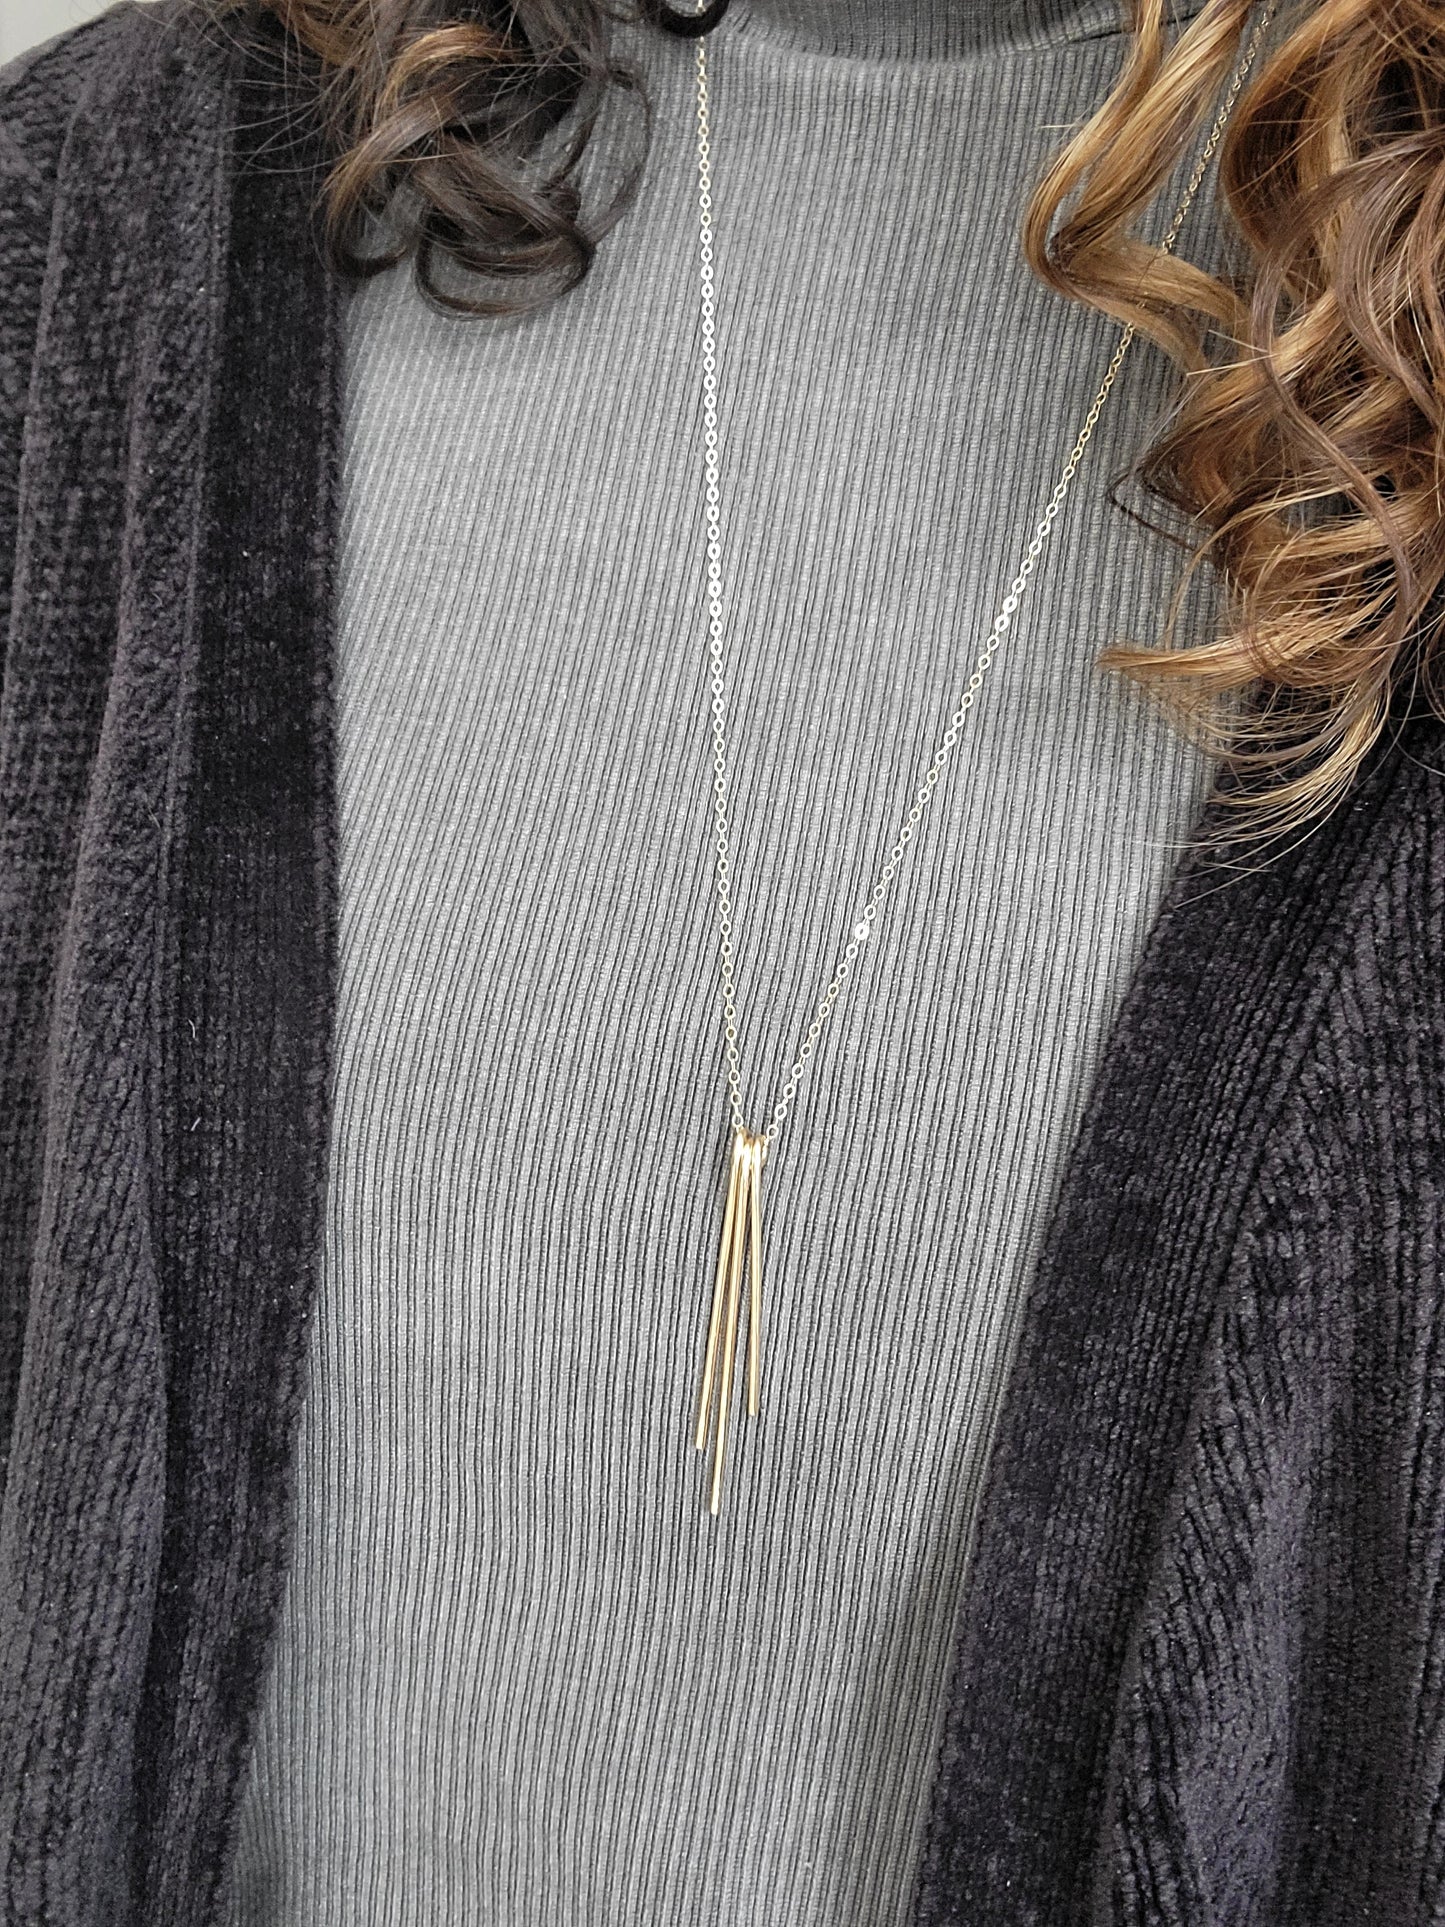 Long Gold Fringe Necklace